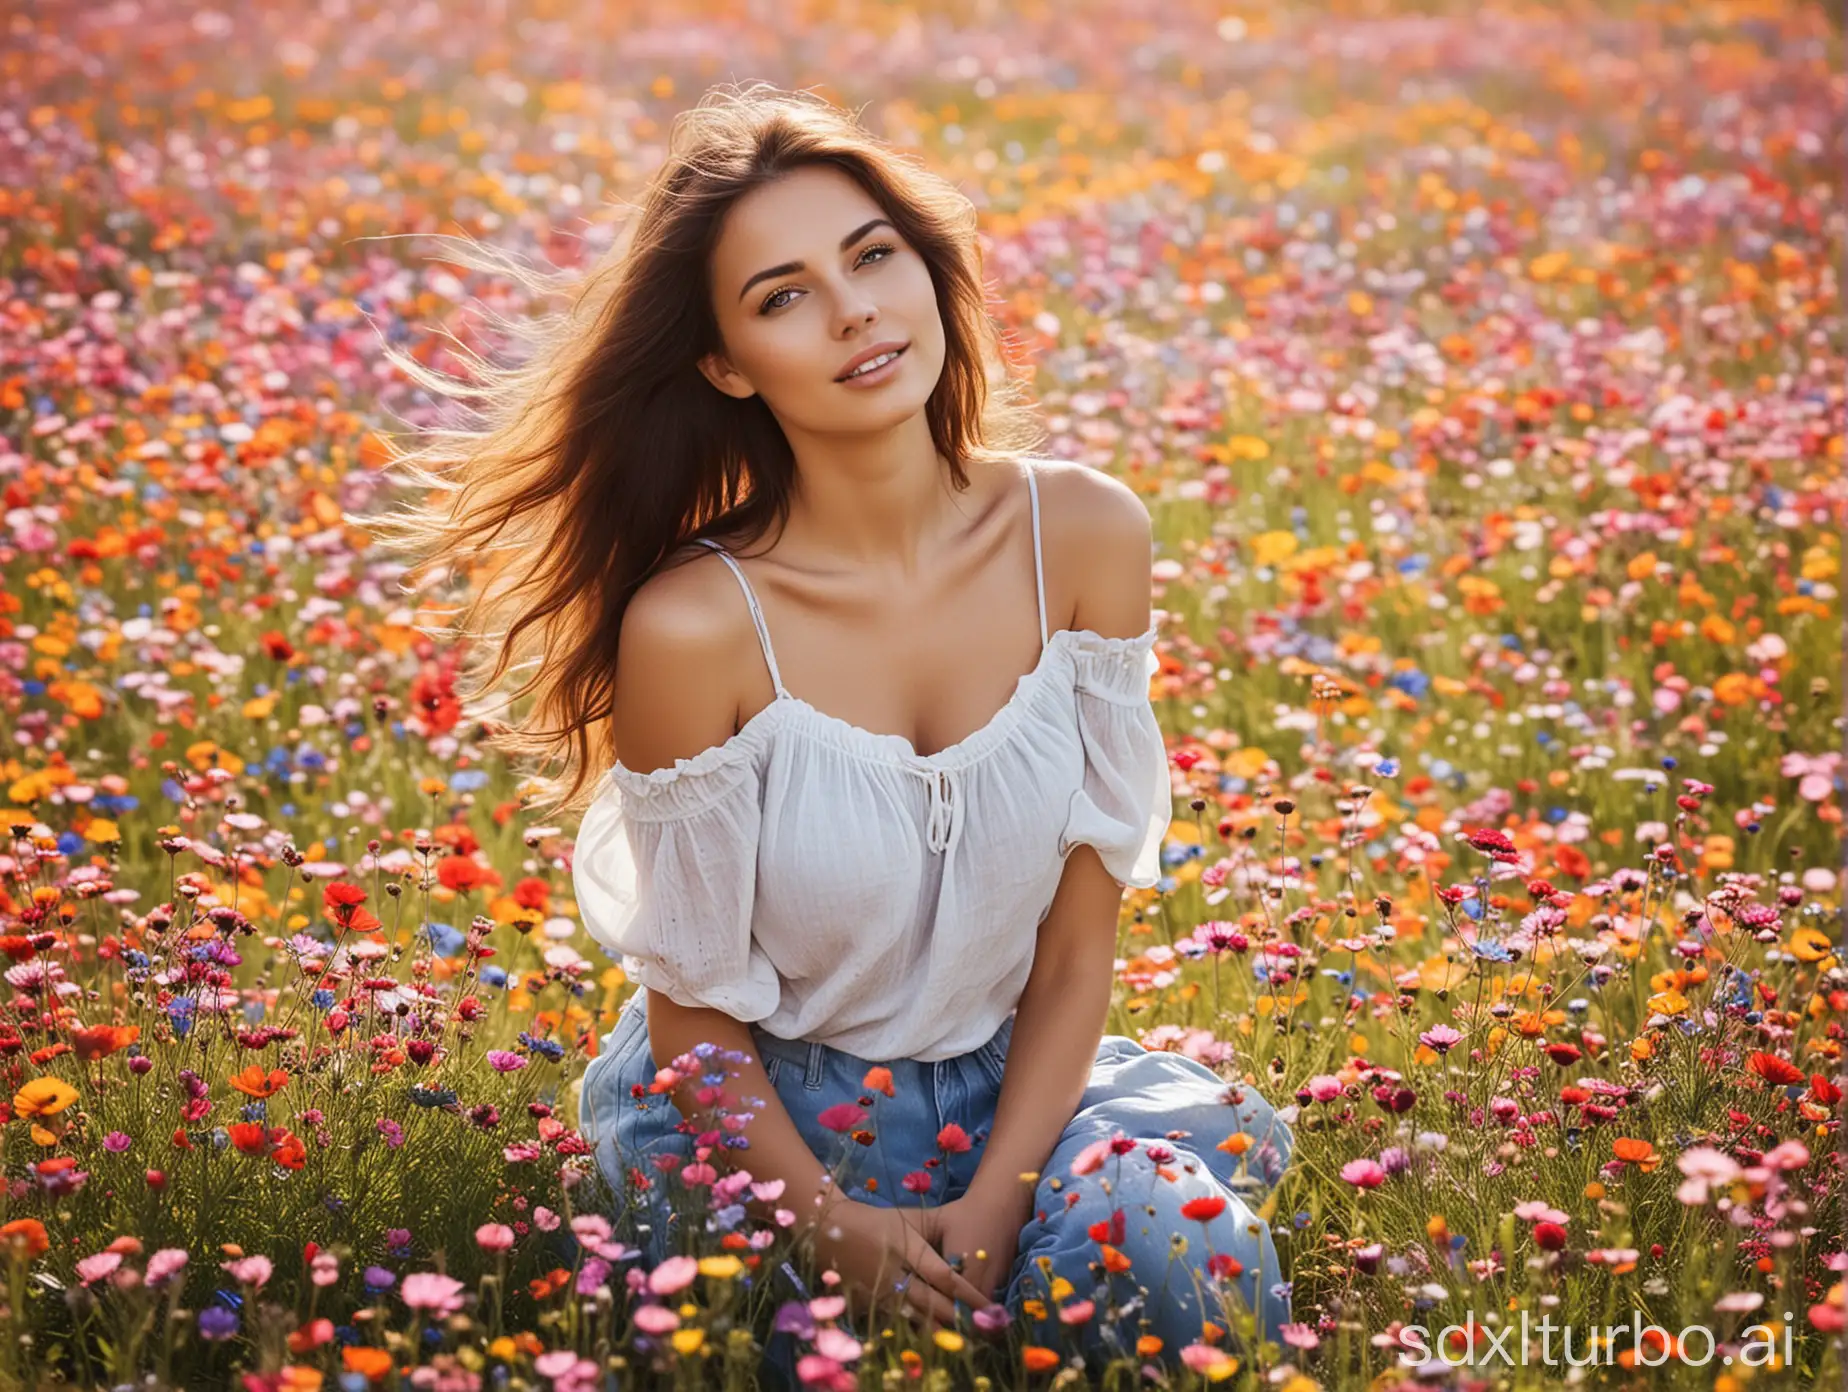 Radiant-Woman-Enjoying-Vibrant-Meadow-Scenery